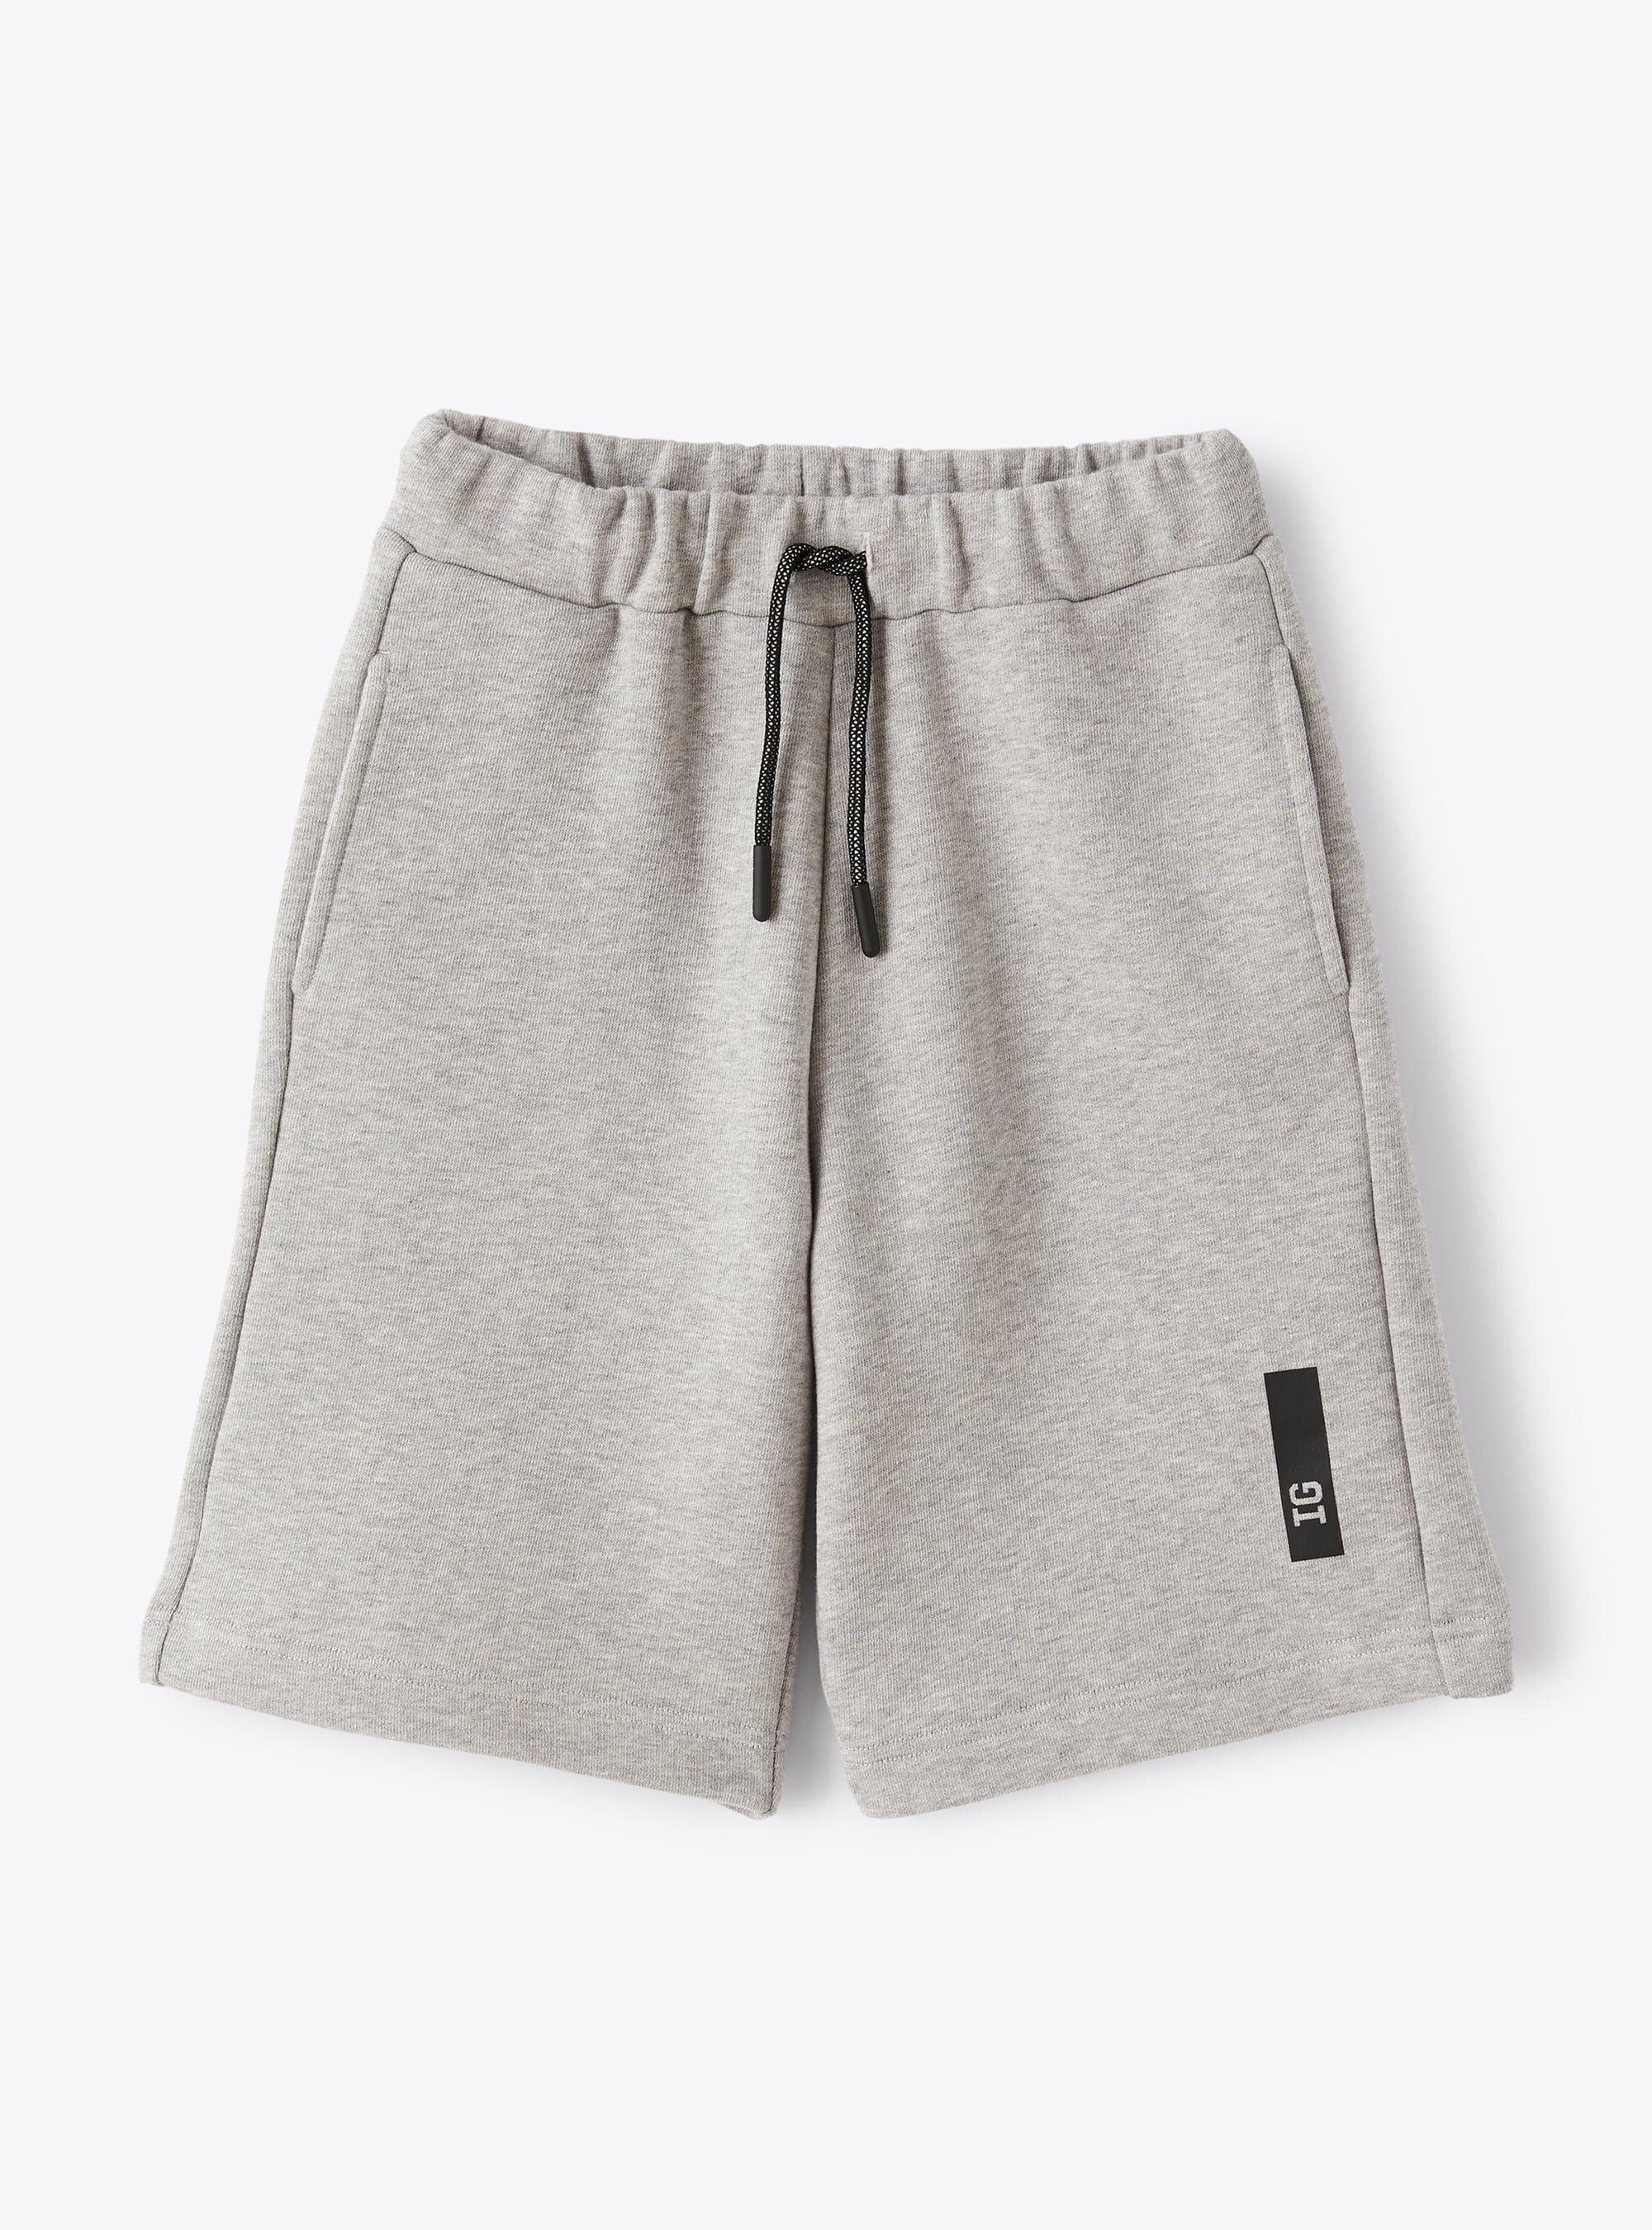 Bermuda shorts in grey fleece with drawstring - Trousers - Il Gufo